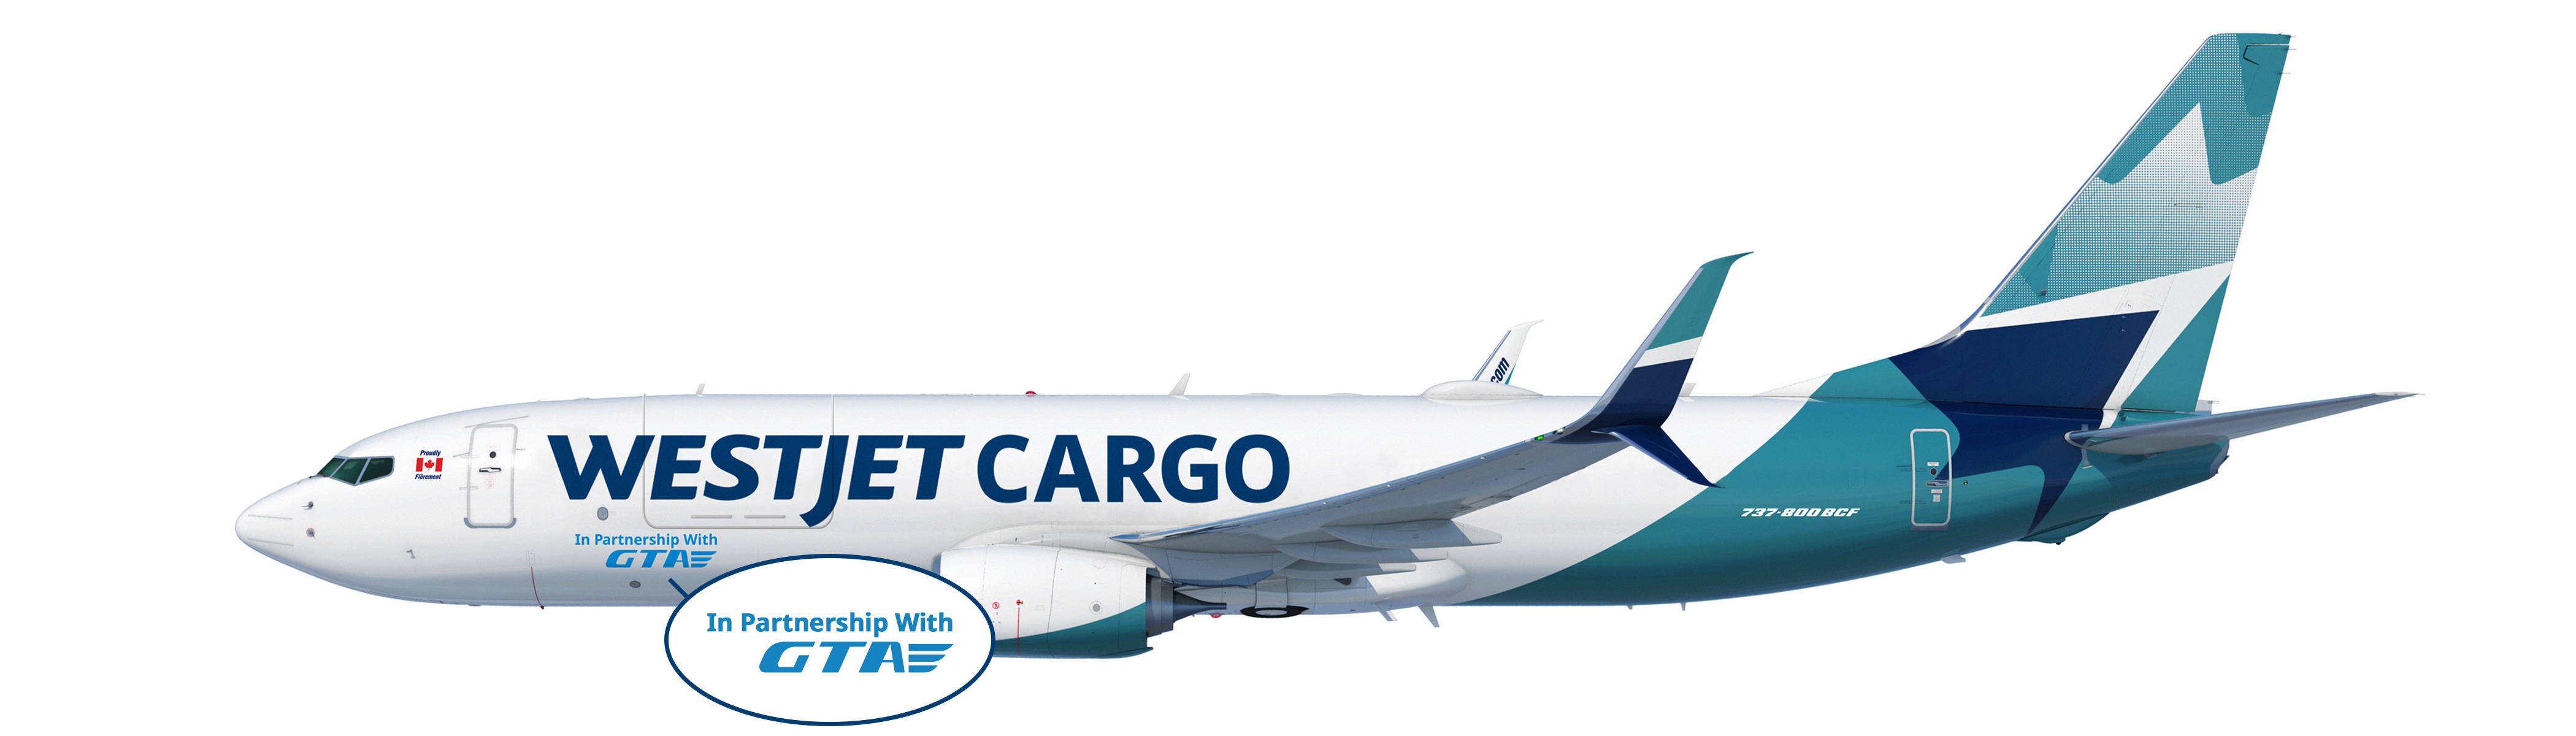 WestJet Cargo Airplane Wallpaper